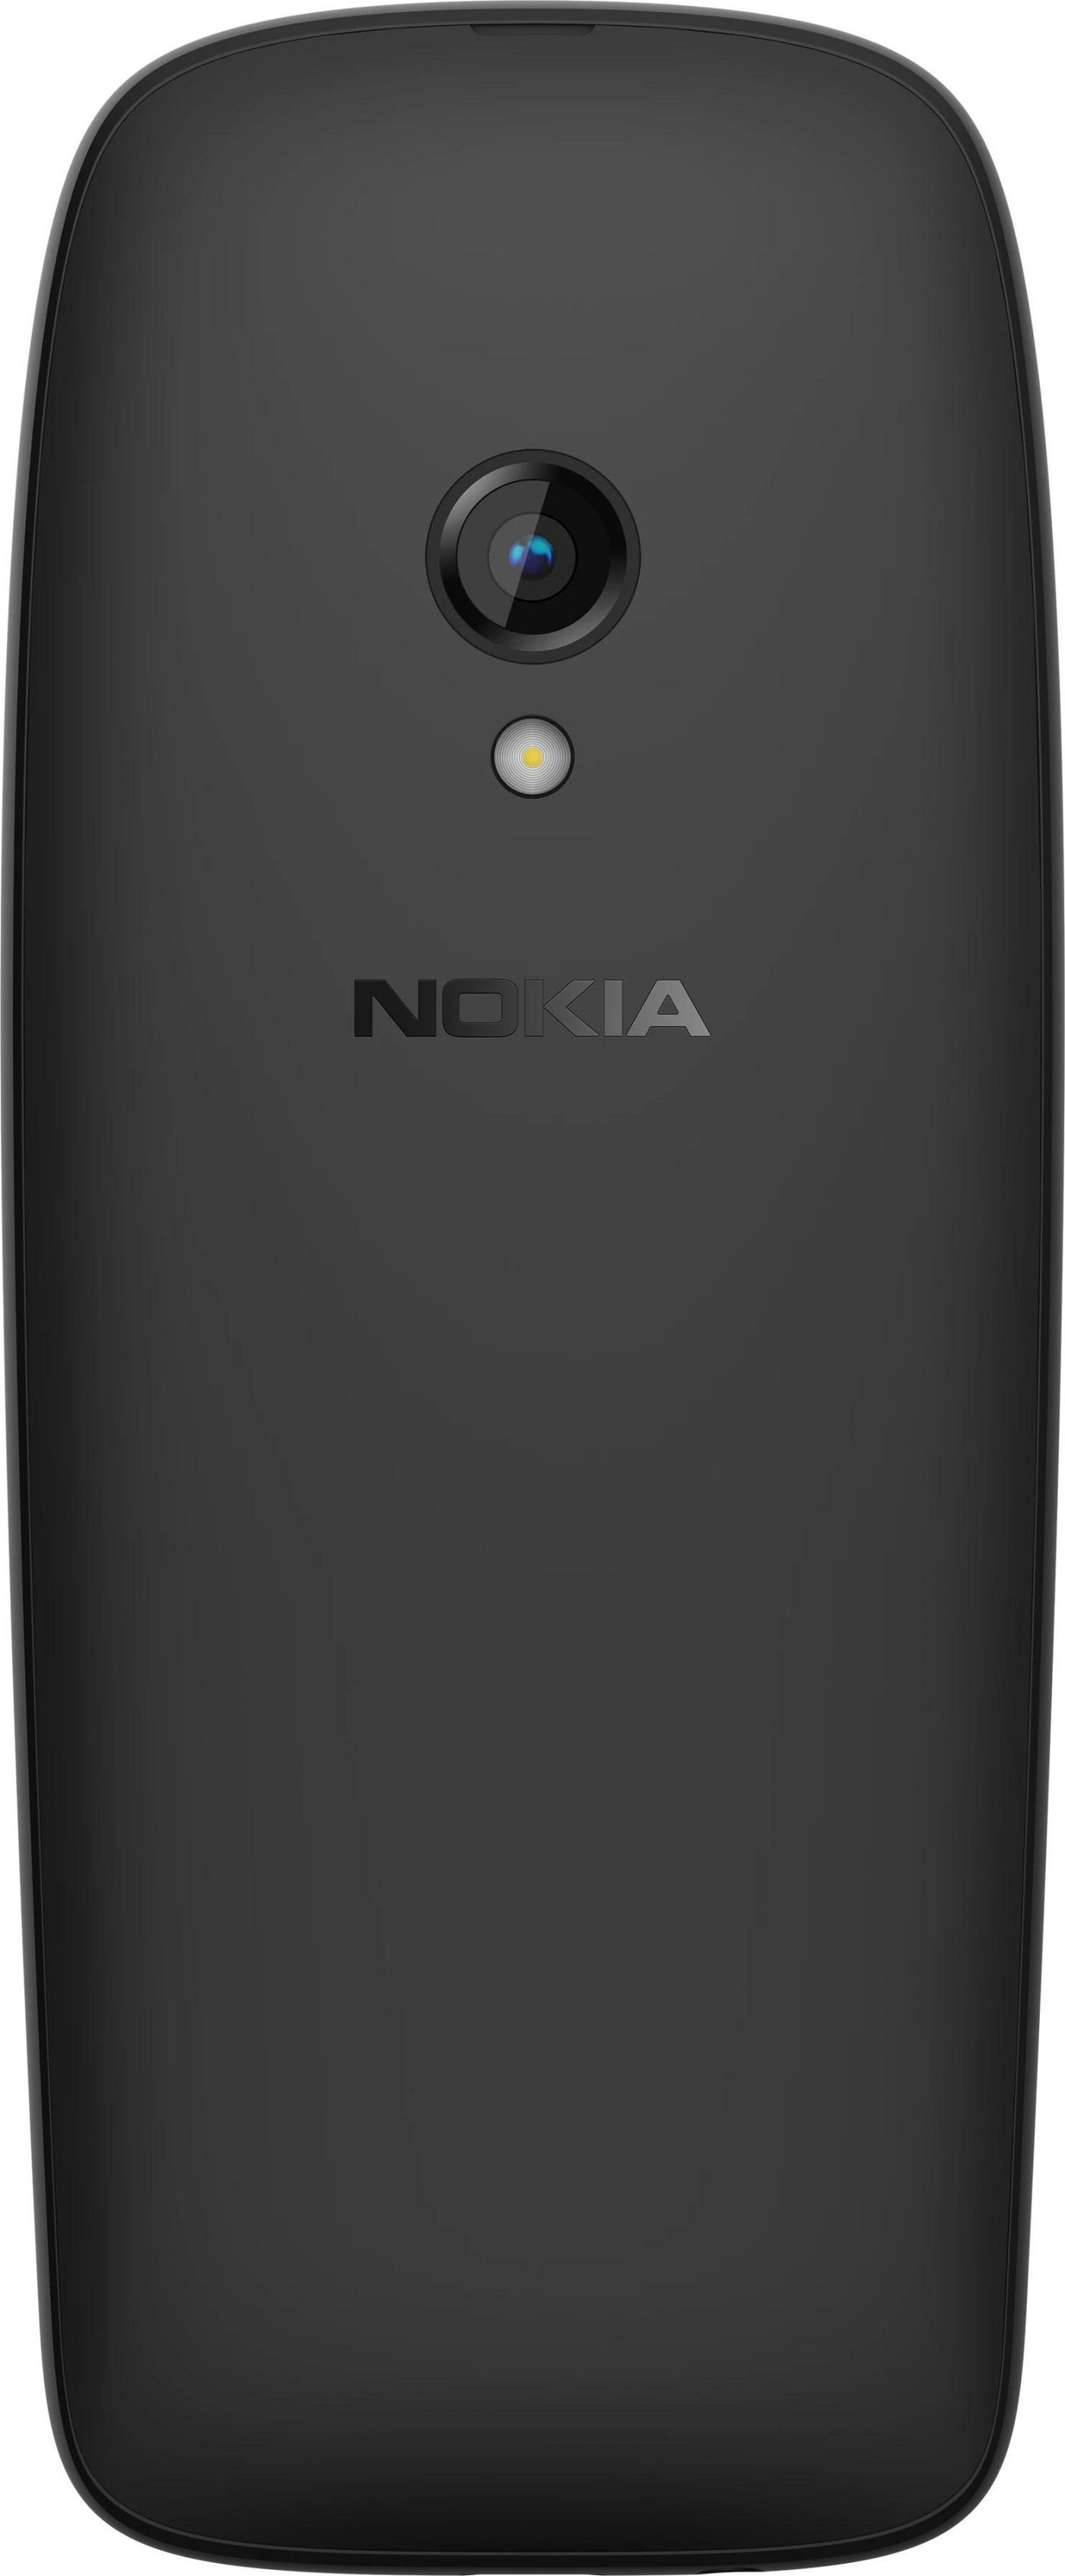 Nokia 16POSB01A09 W128442092 6310 7.11 Cm 2.8 Black 